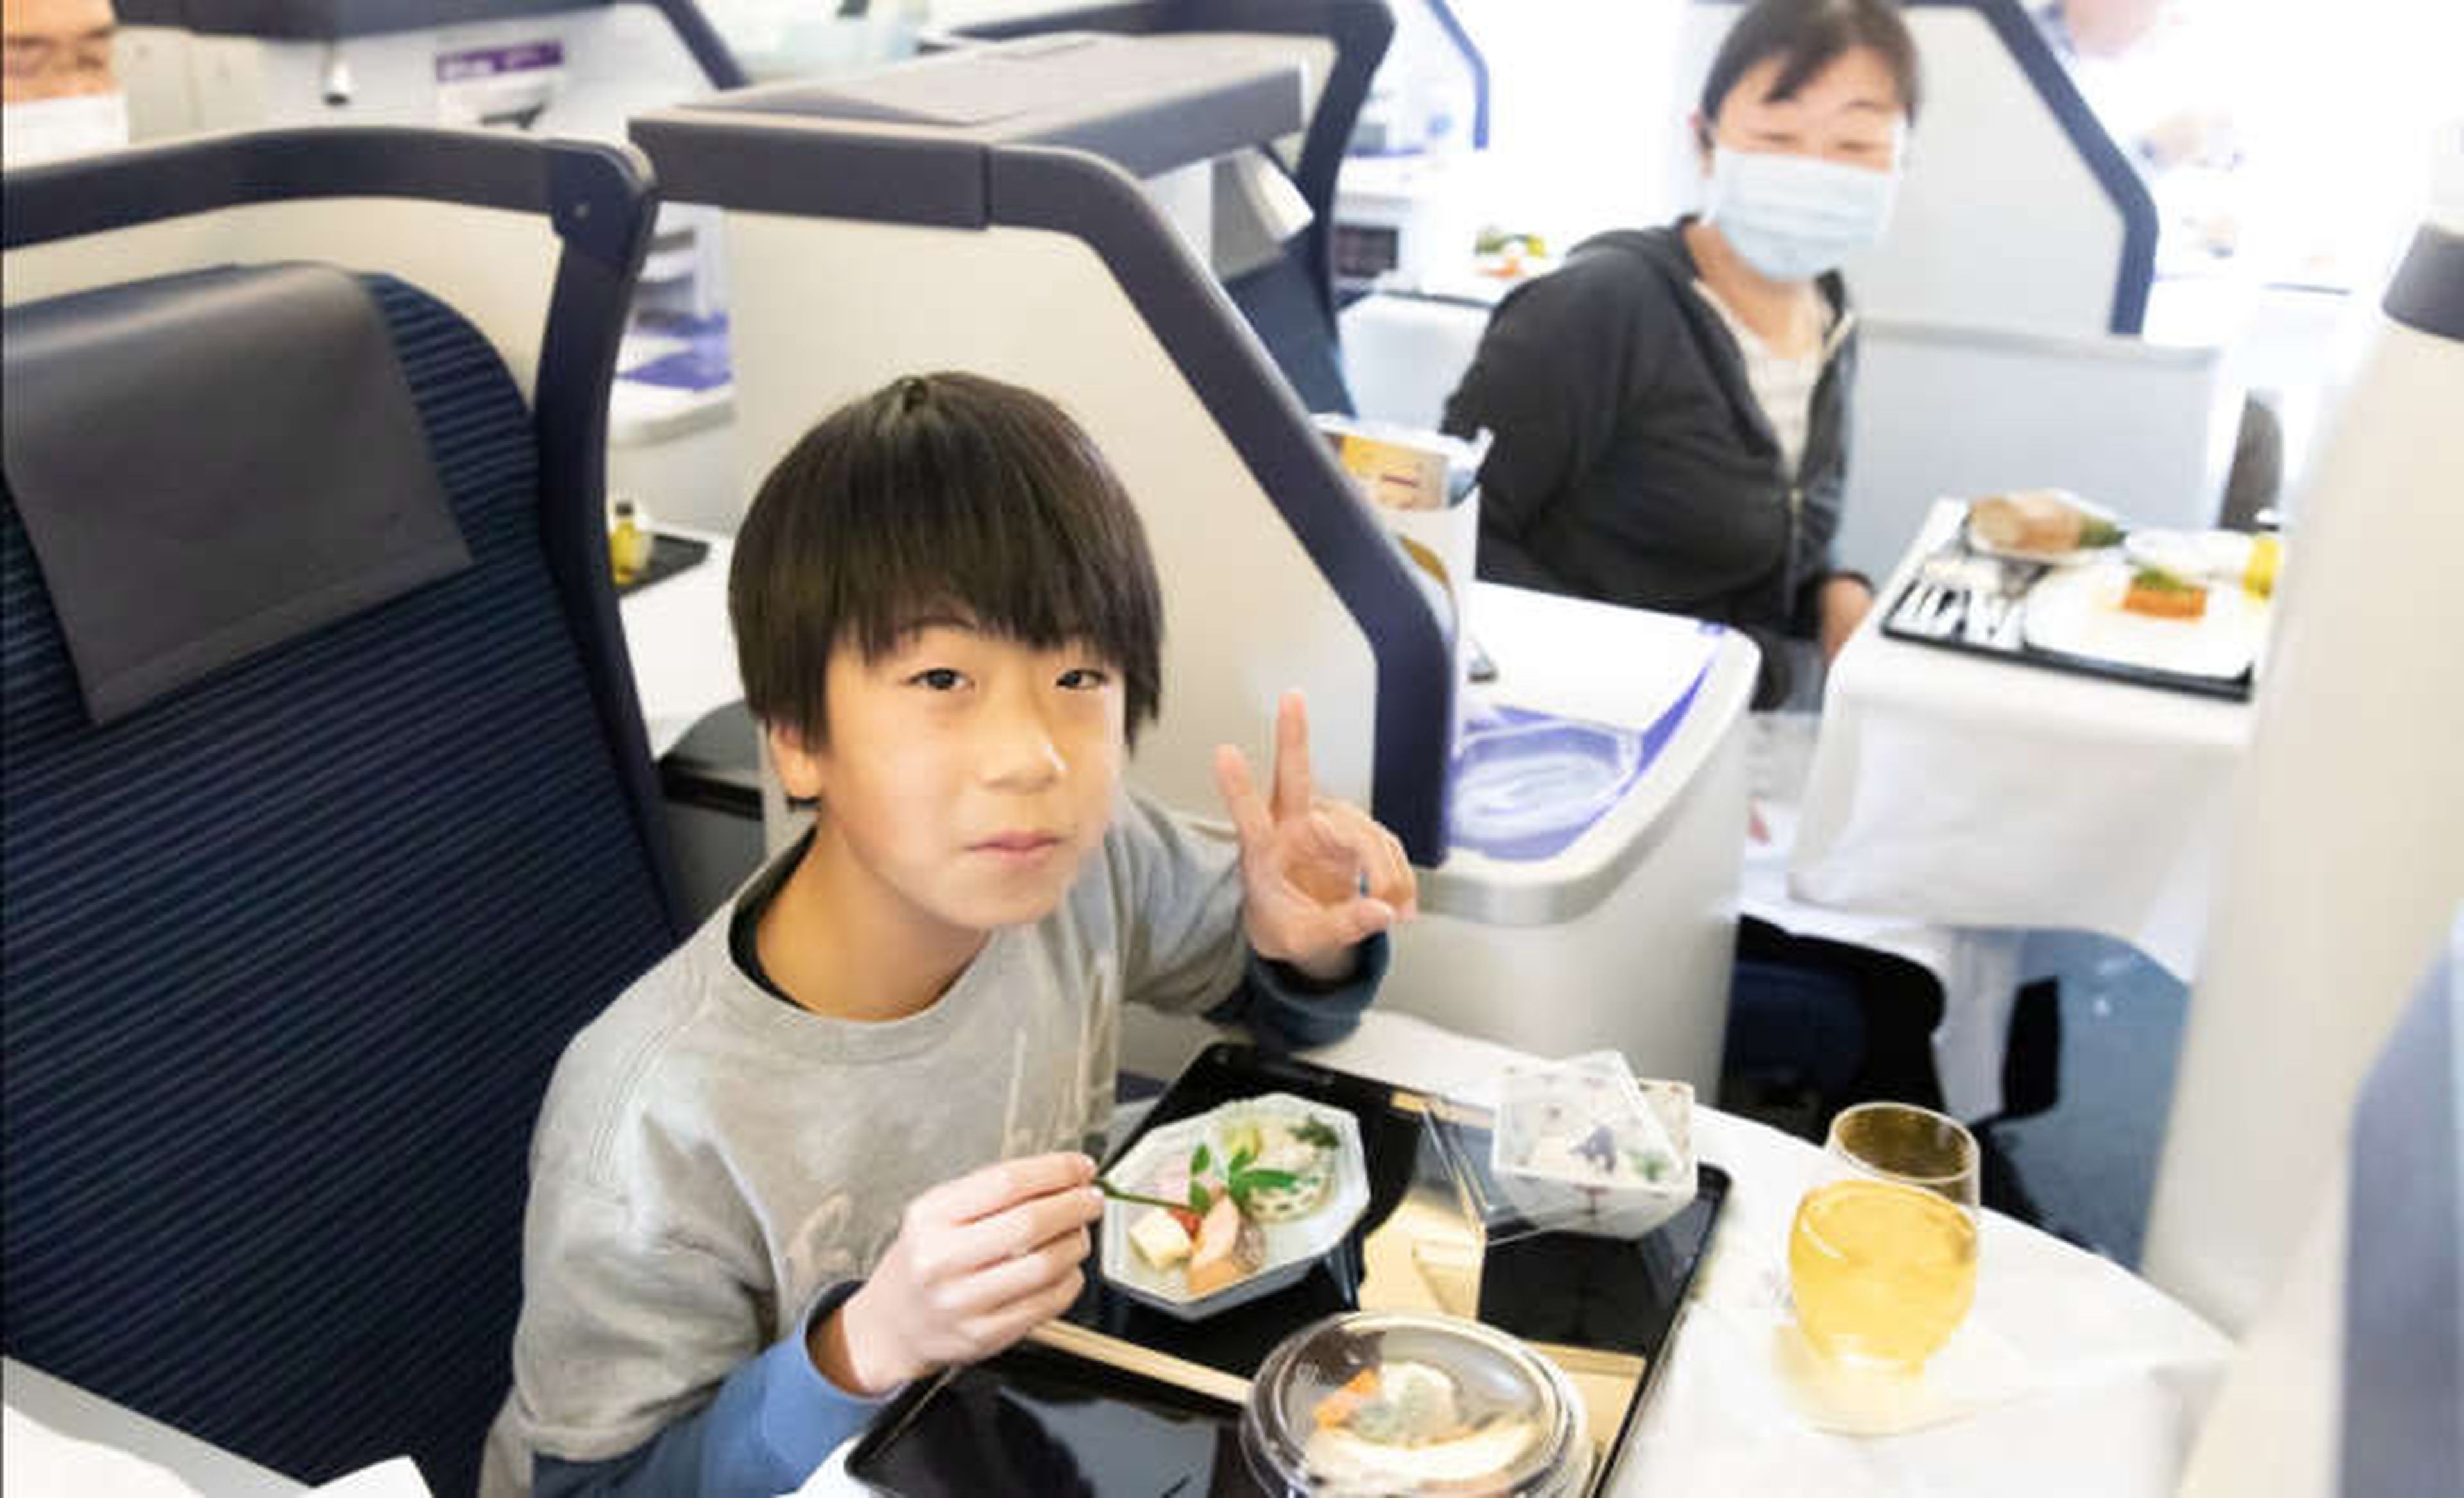 Niño comiendo en avion